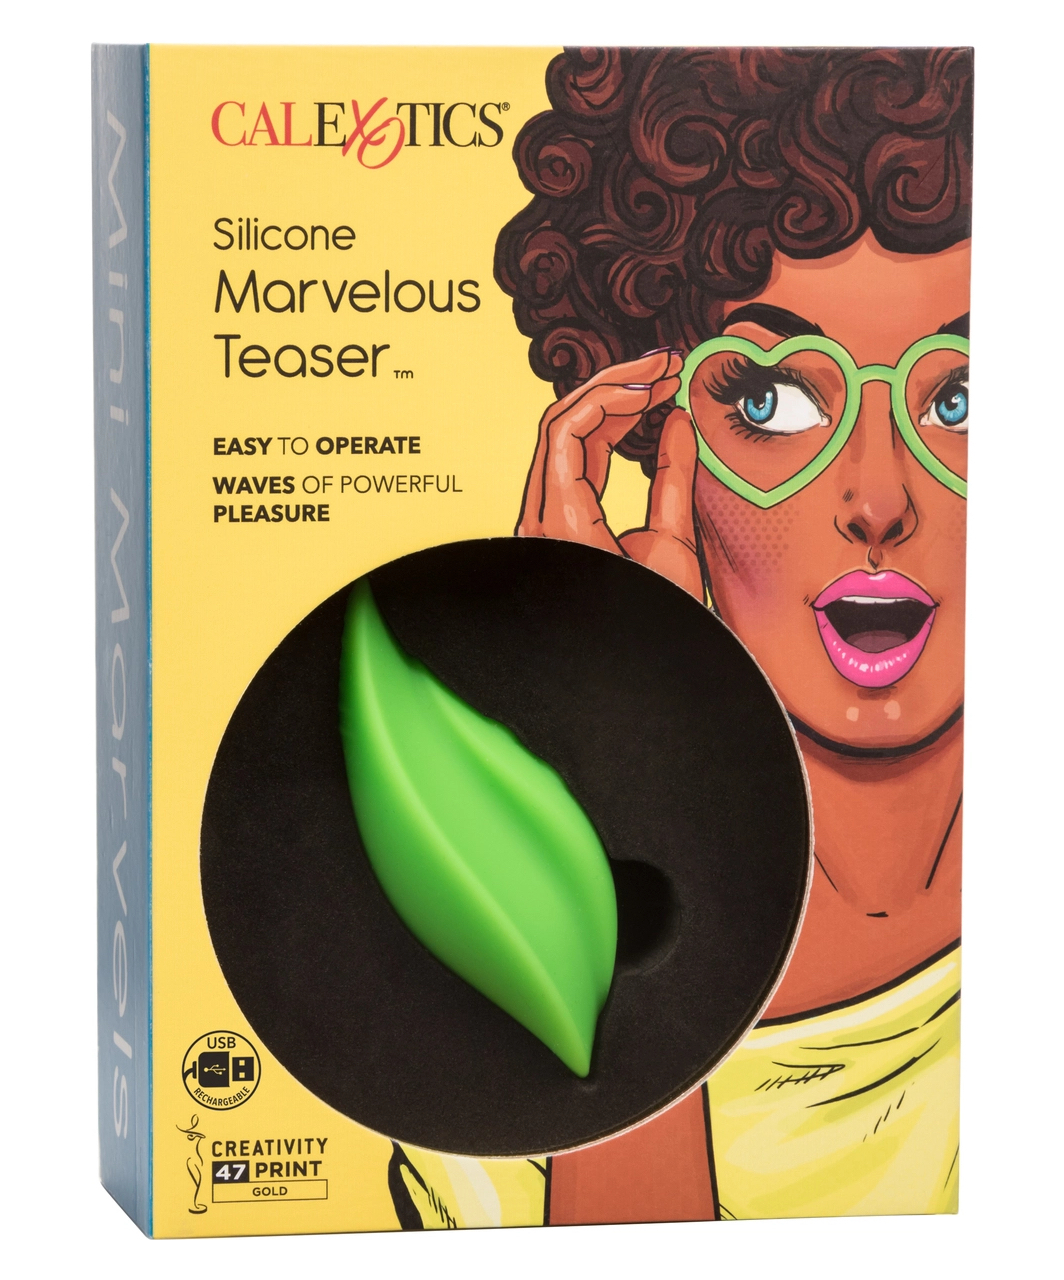 CalExotics Marvelous Teaser vibraator